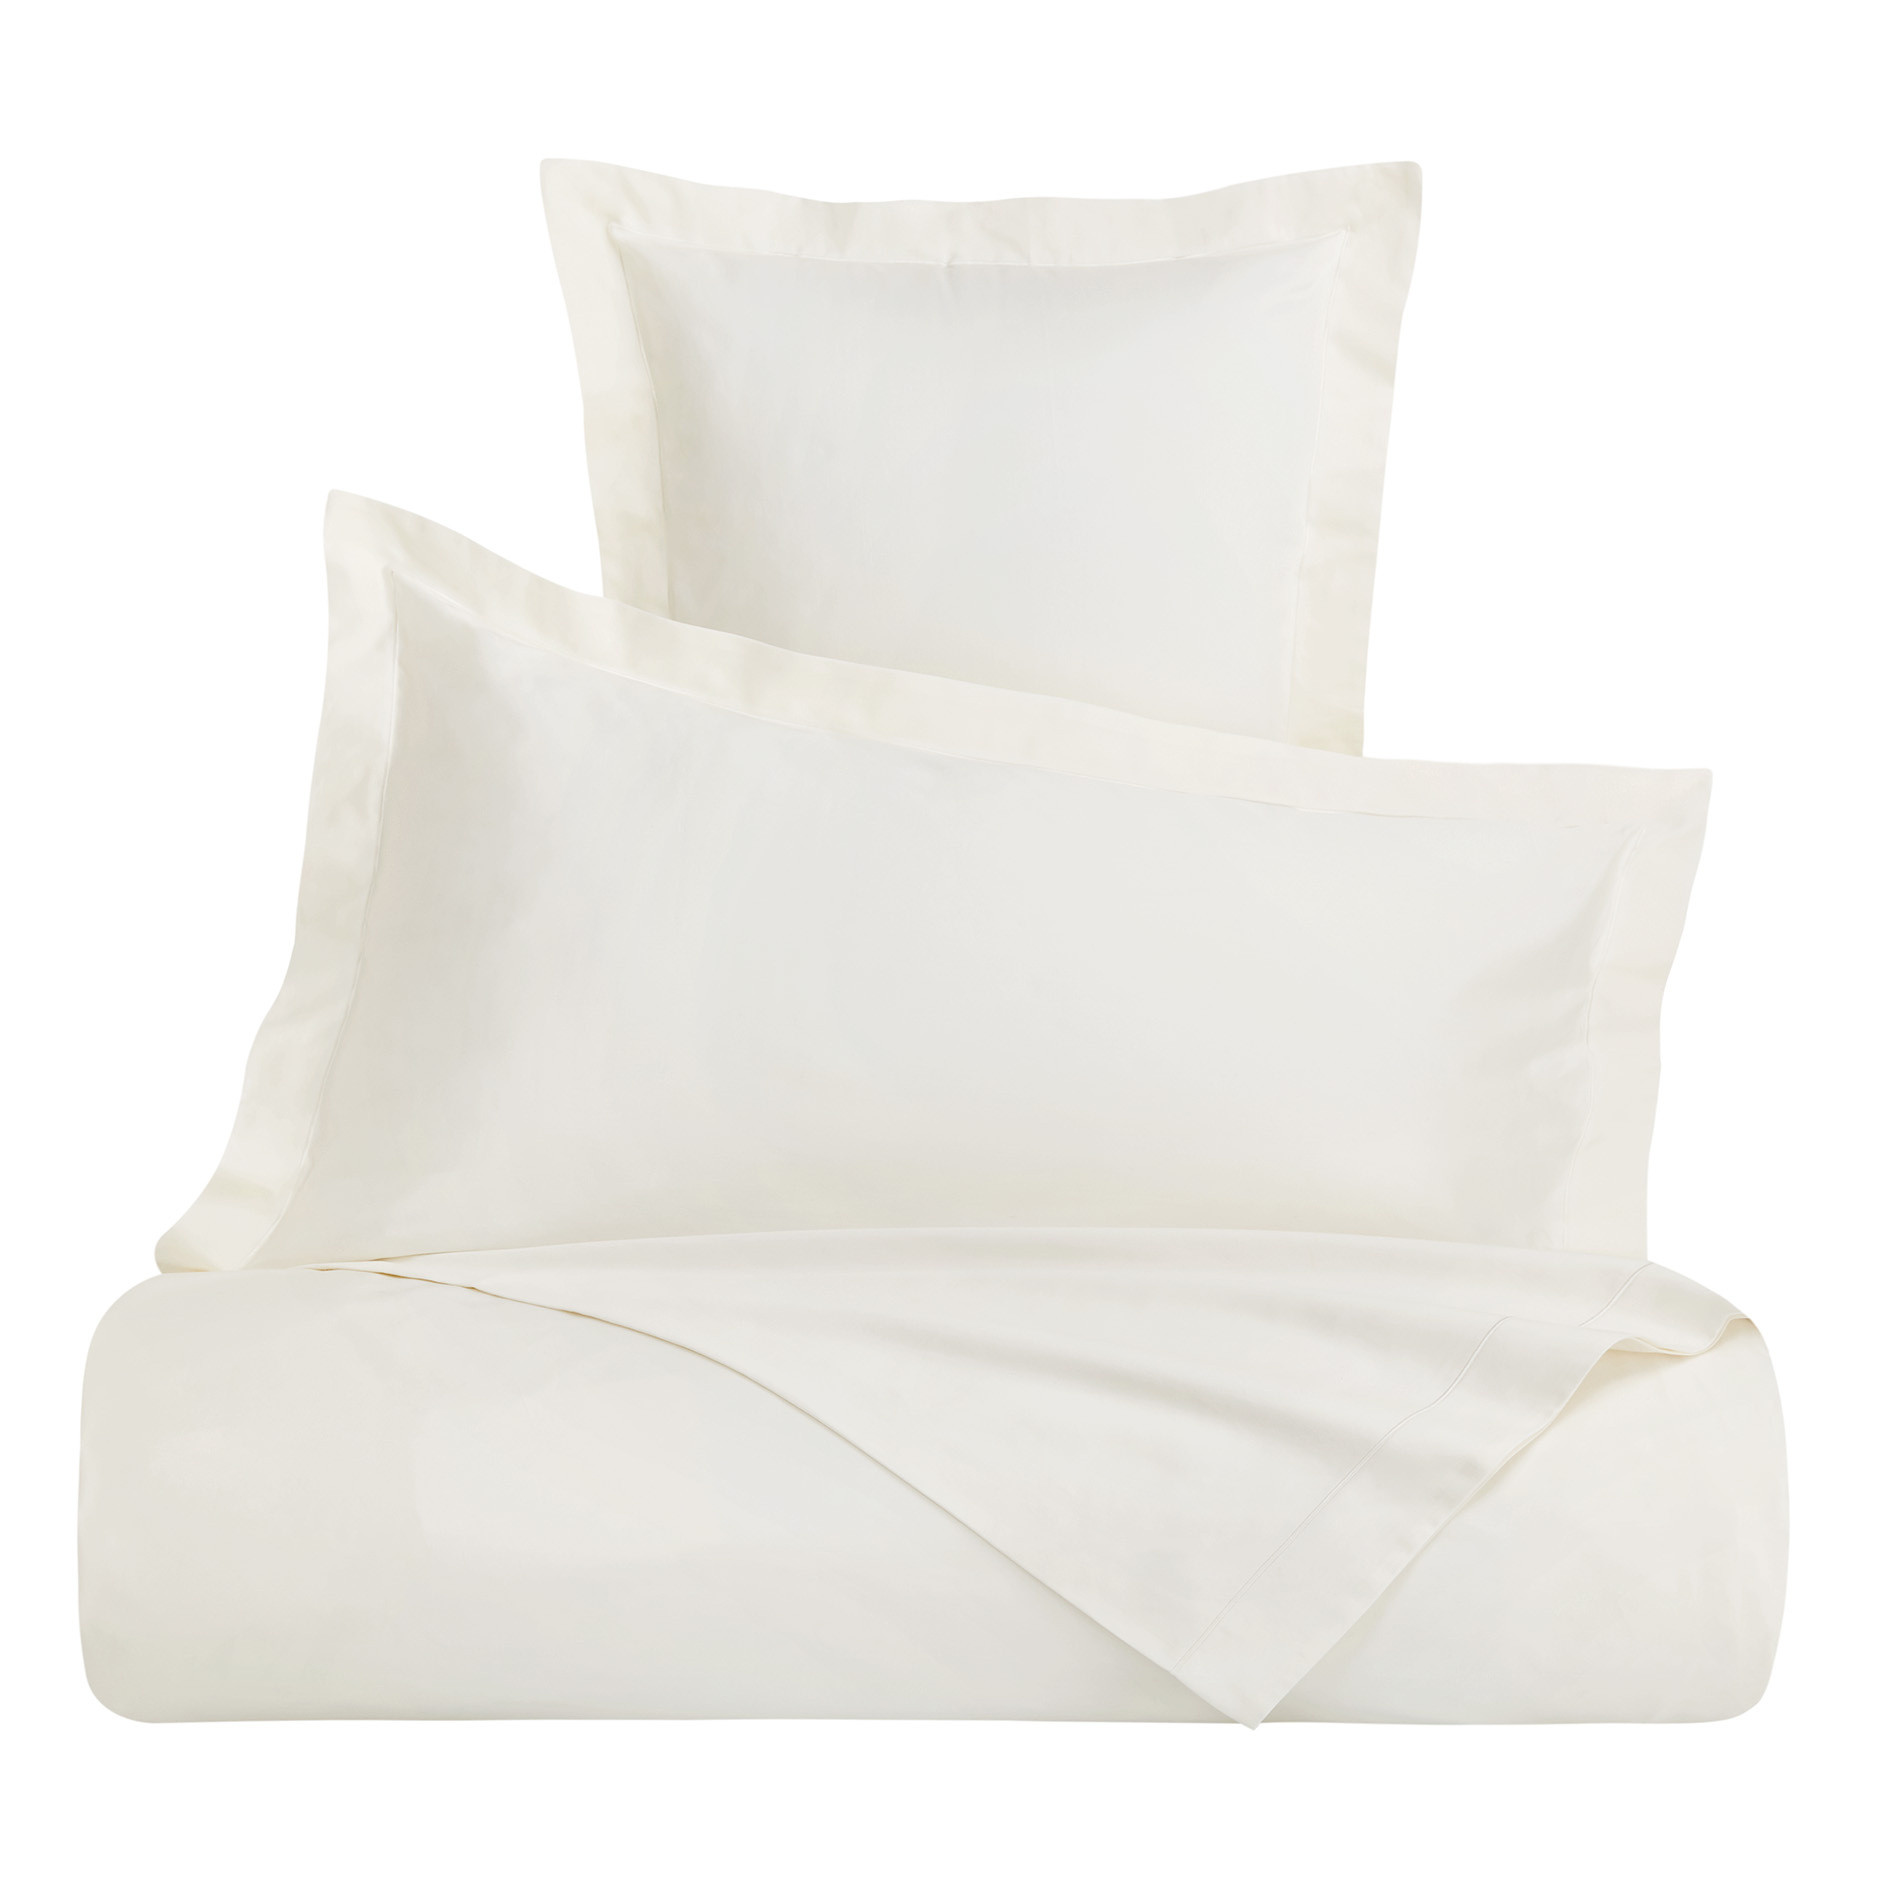 Pillowcase in TC400 satin cotton, Cream, large image number 1